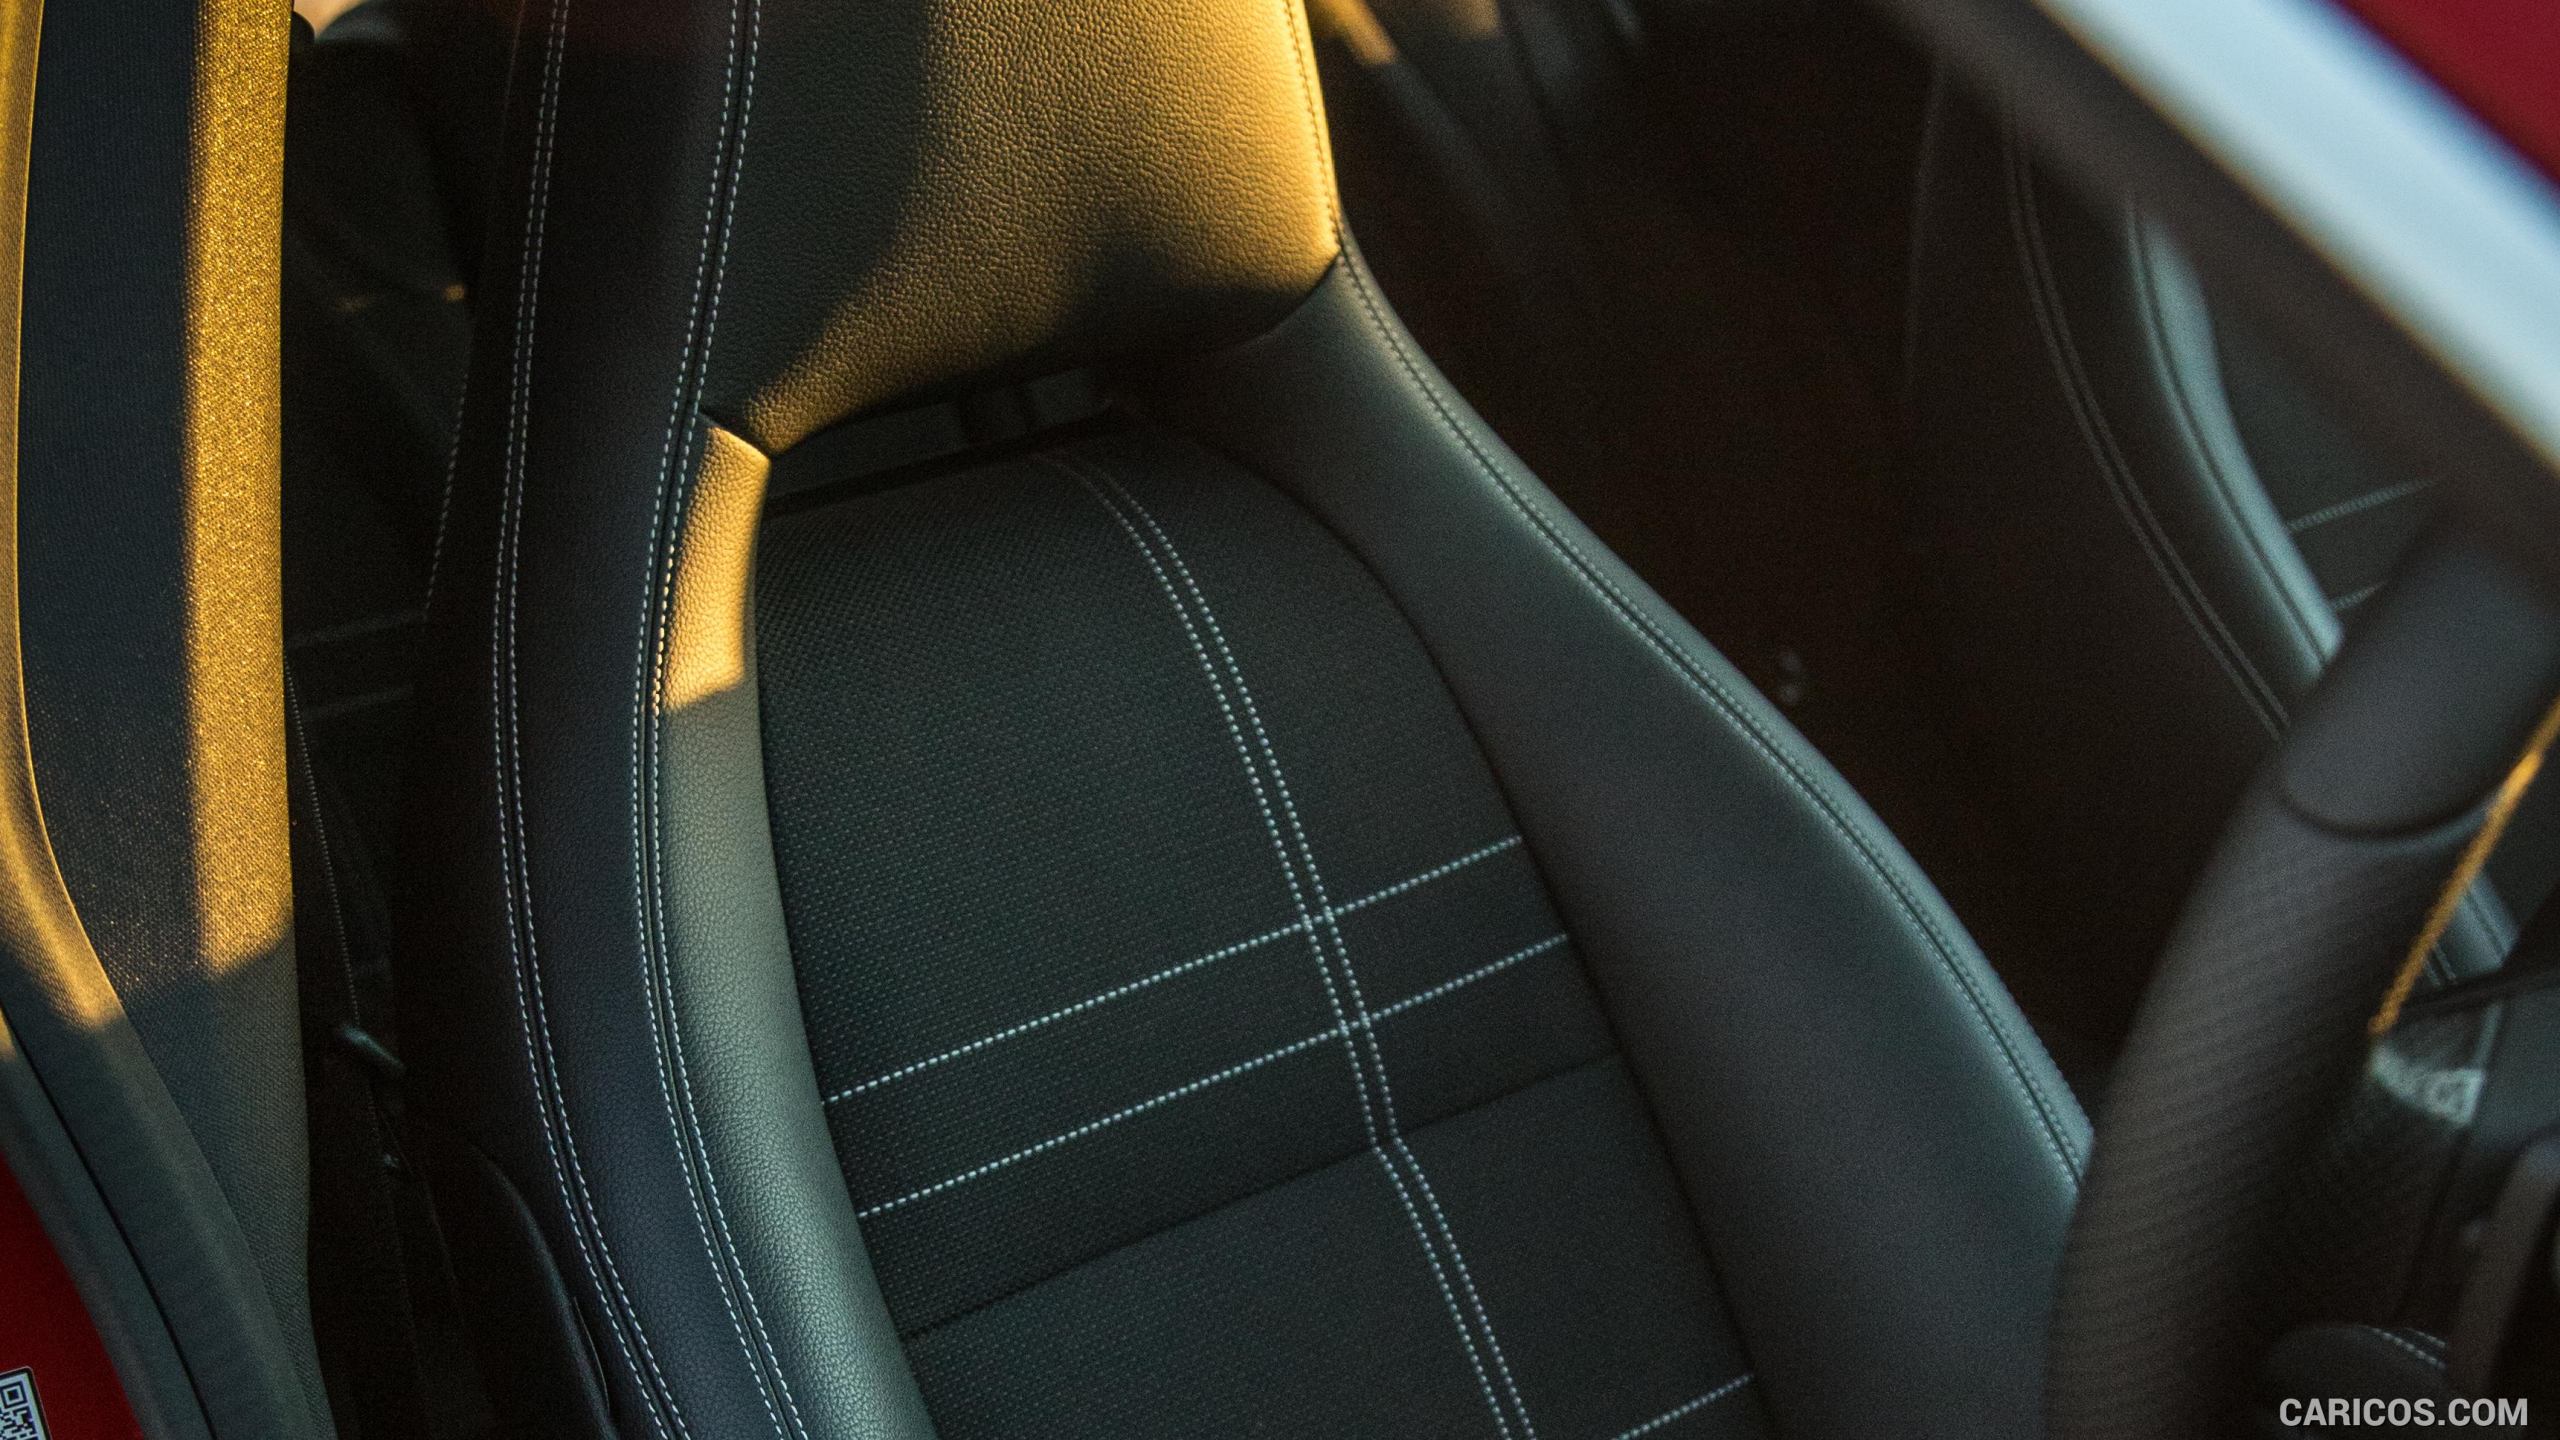 2015 Mercedes-Benz CLA 200 CDI Shooting Brake (UK-Spec) - Interior, Front Seats, #93 of 96